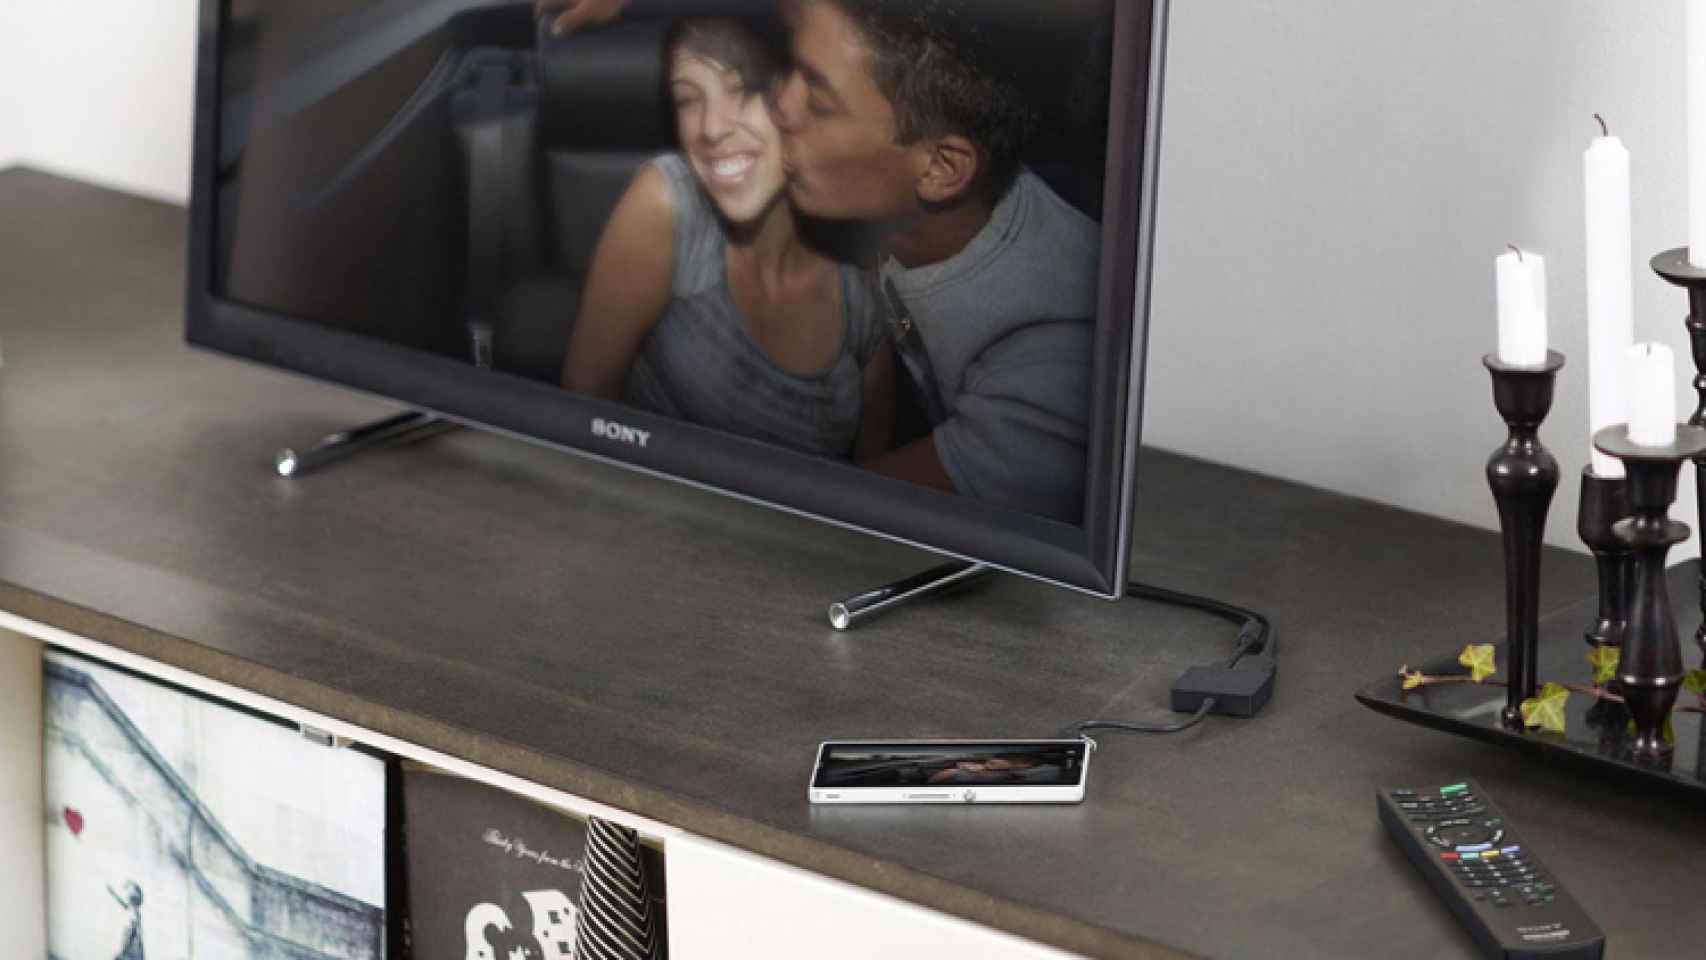 Программа для просмотра с телефона на телевизор. Sony im750. DLNA LG Smart TV. DEXP 24 дюйма телевизор Smart TV. Телевизор через смартфон.